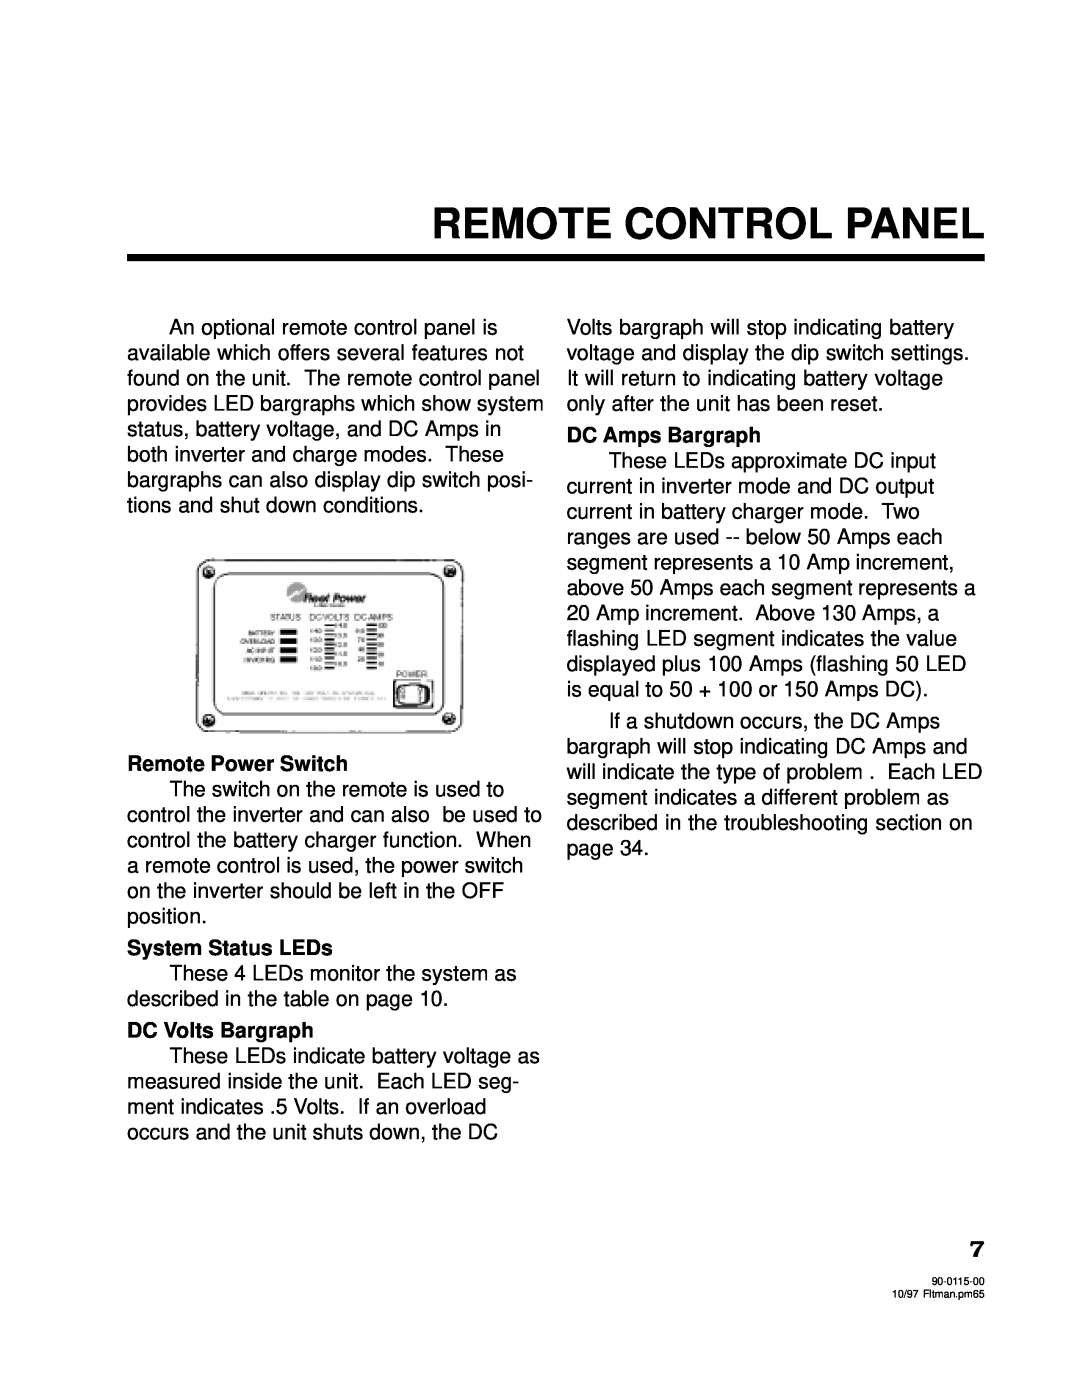 Xantrex Technology 2000 Remote Control Panel, Remote Power Switch, System Status LEDs, DC Volts Bargraph, DC Amps Bargraph 